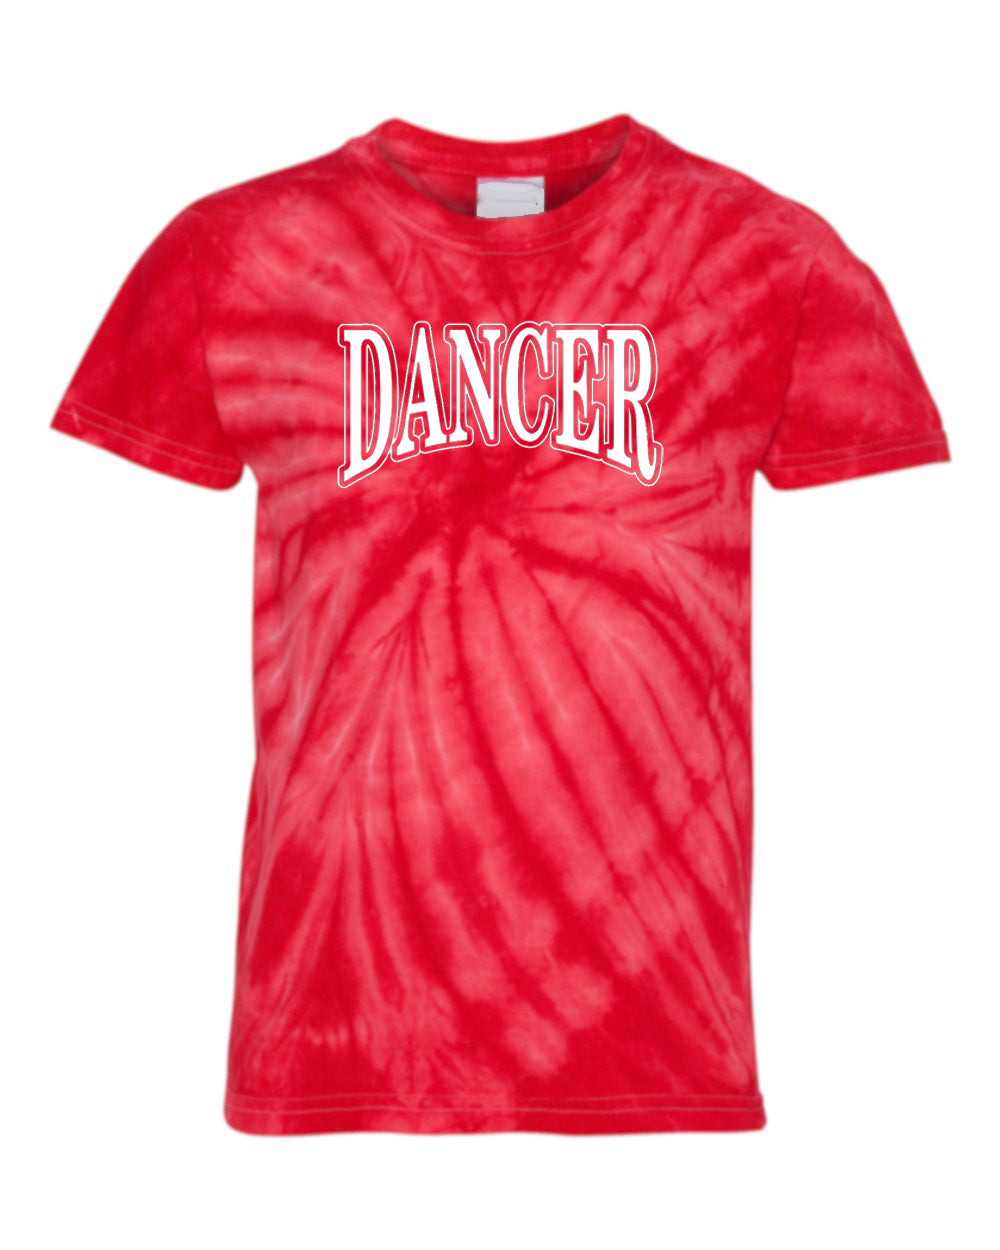 Dancer Adult Tie Dye T-Shirt